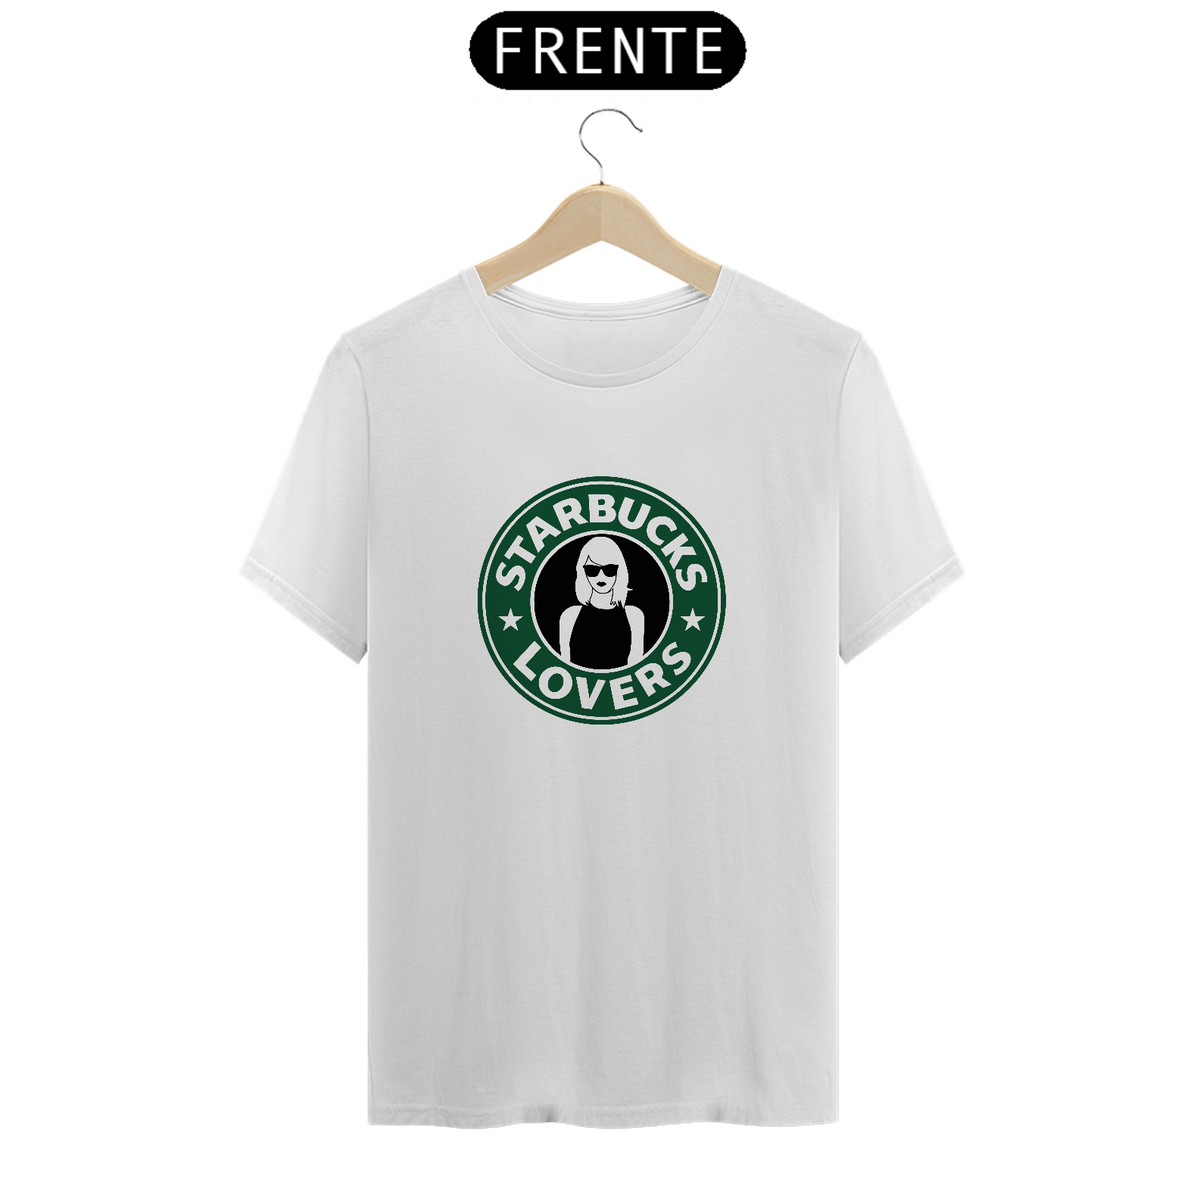 Nome do produto: Camiseta Unissex - Starbucks Lovers Taylor Swift 